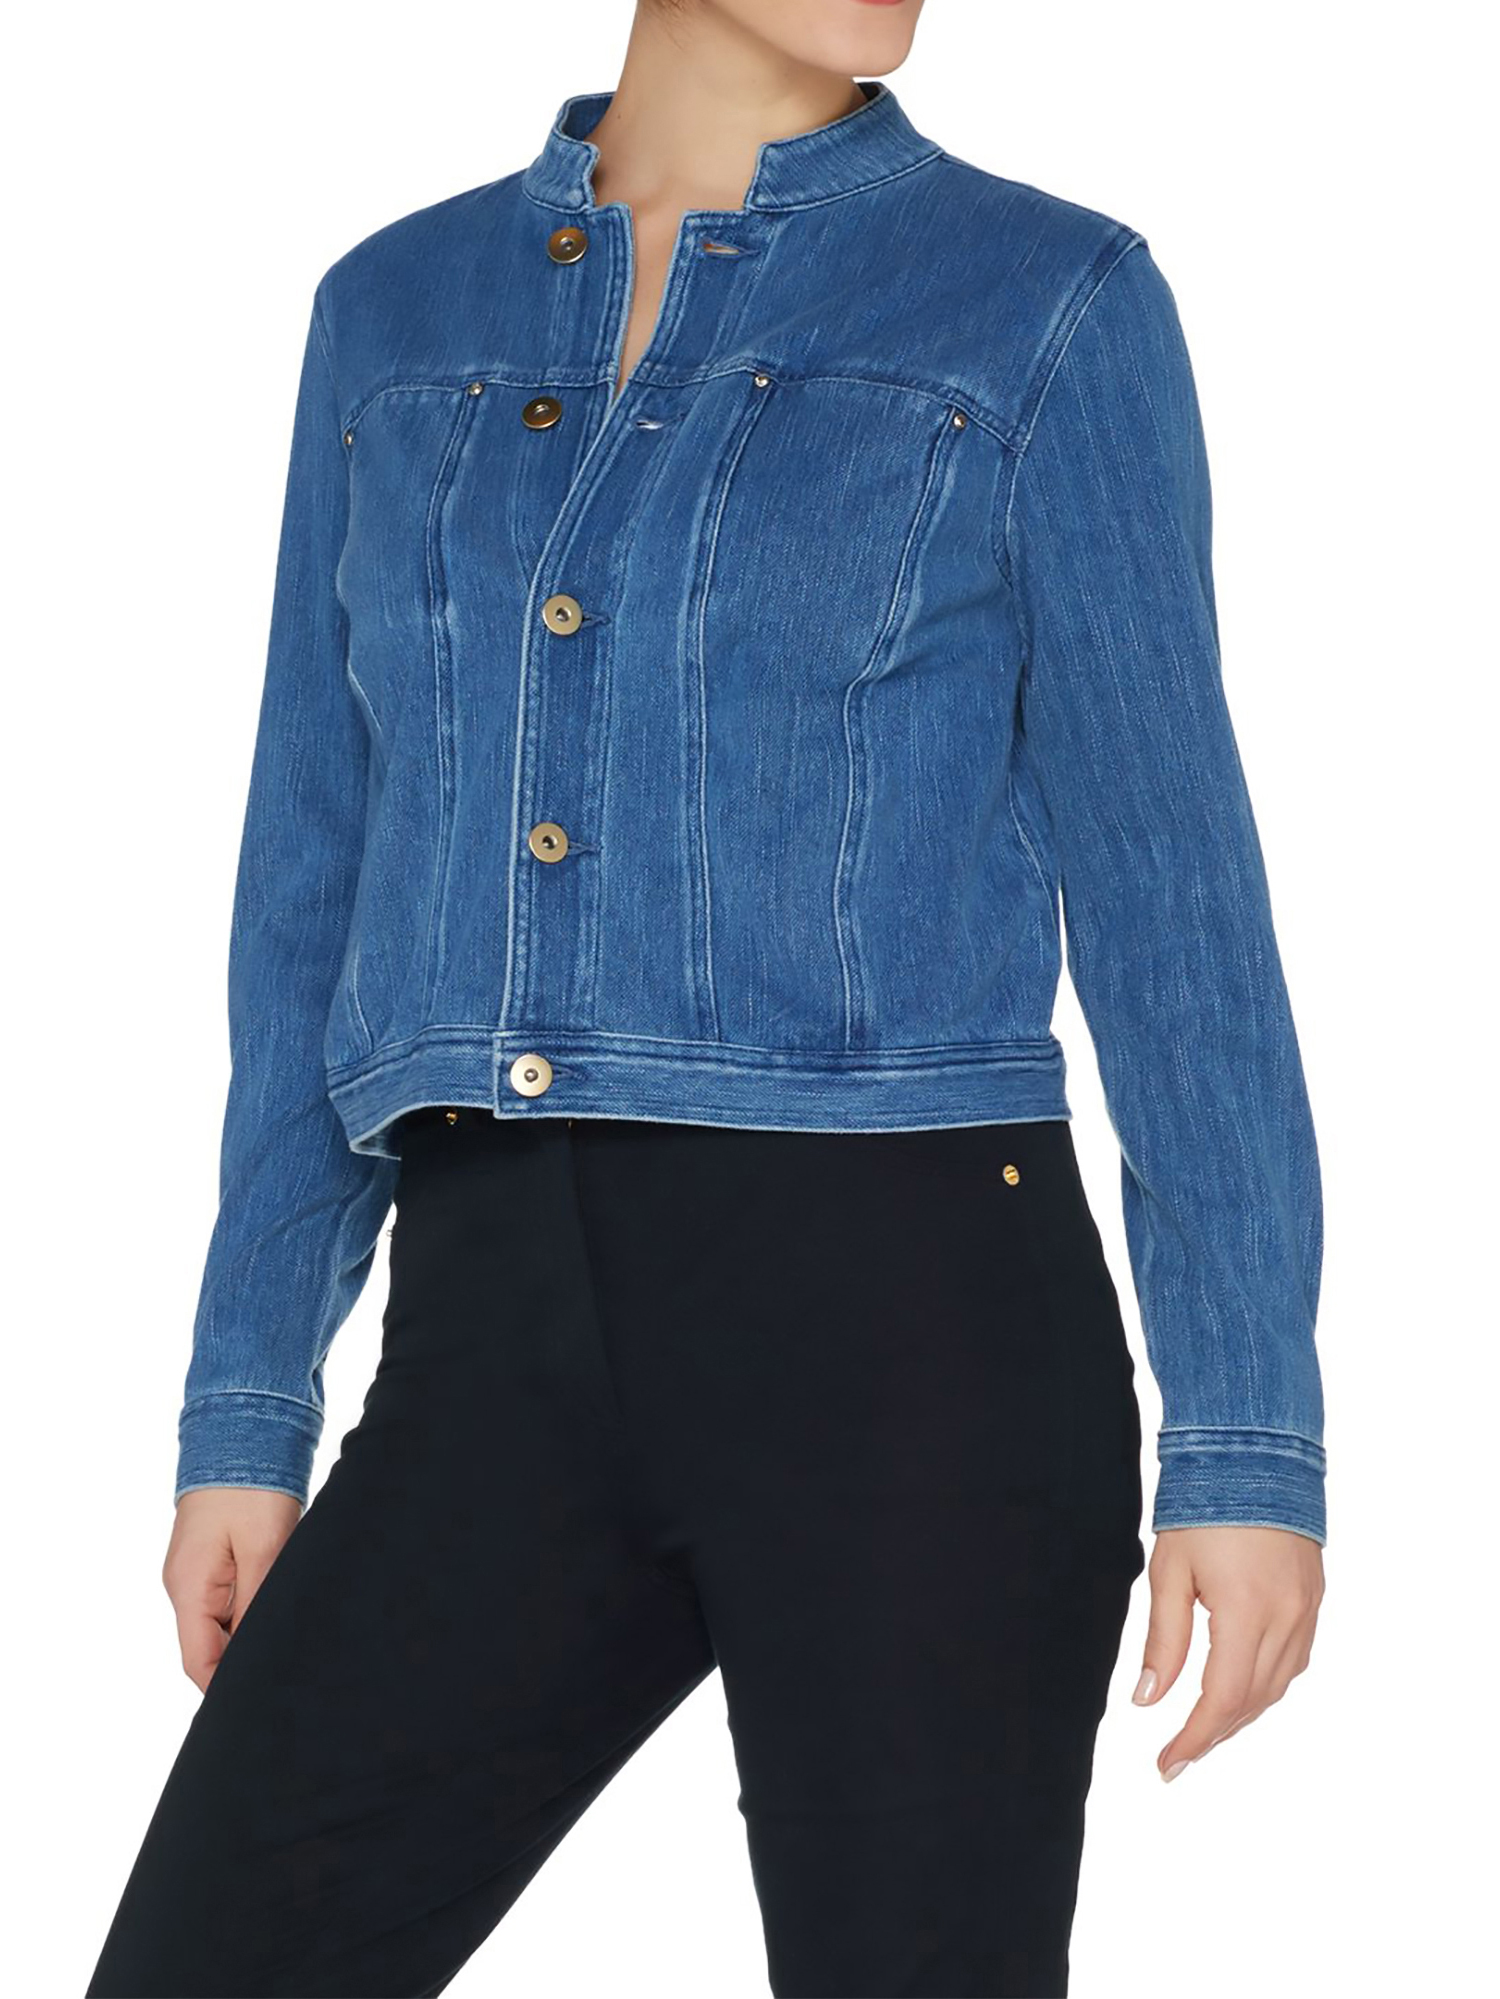 BELLE by KIM GRAVEL Size M Flexibelle Denim Jean Jacket BLUE – NYC Moda ...